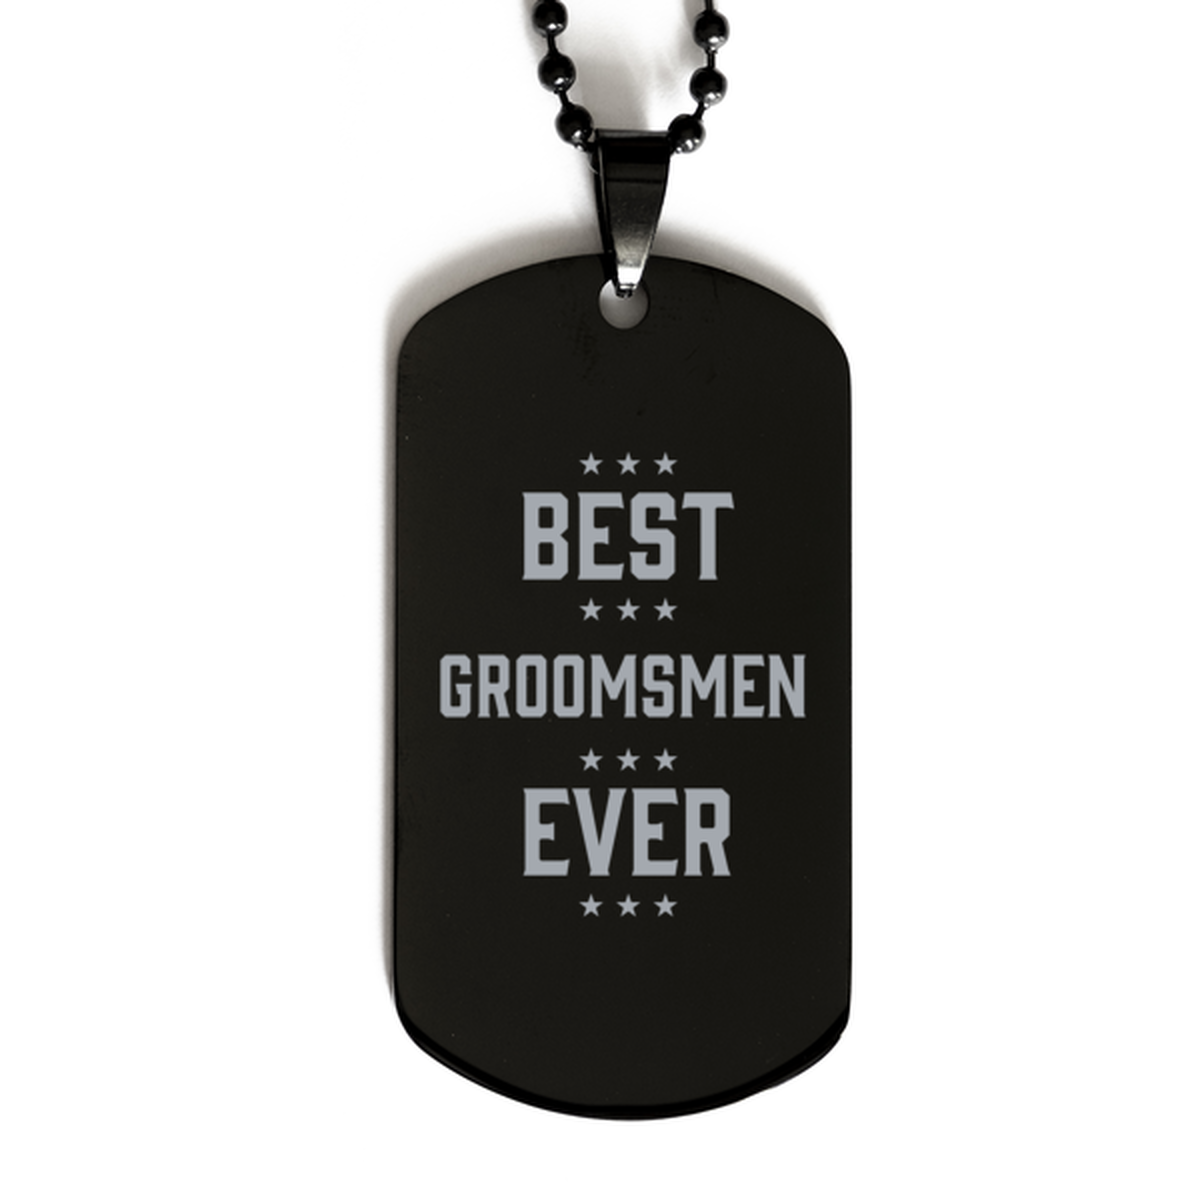 Best Groomsmen Ever Groomsmen Gifts, Funny Black Dog Tag For Groomsmen, Birthday Family Presents Engraved Necklace For Men